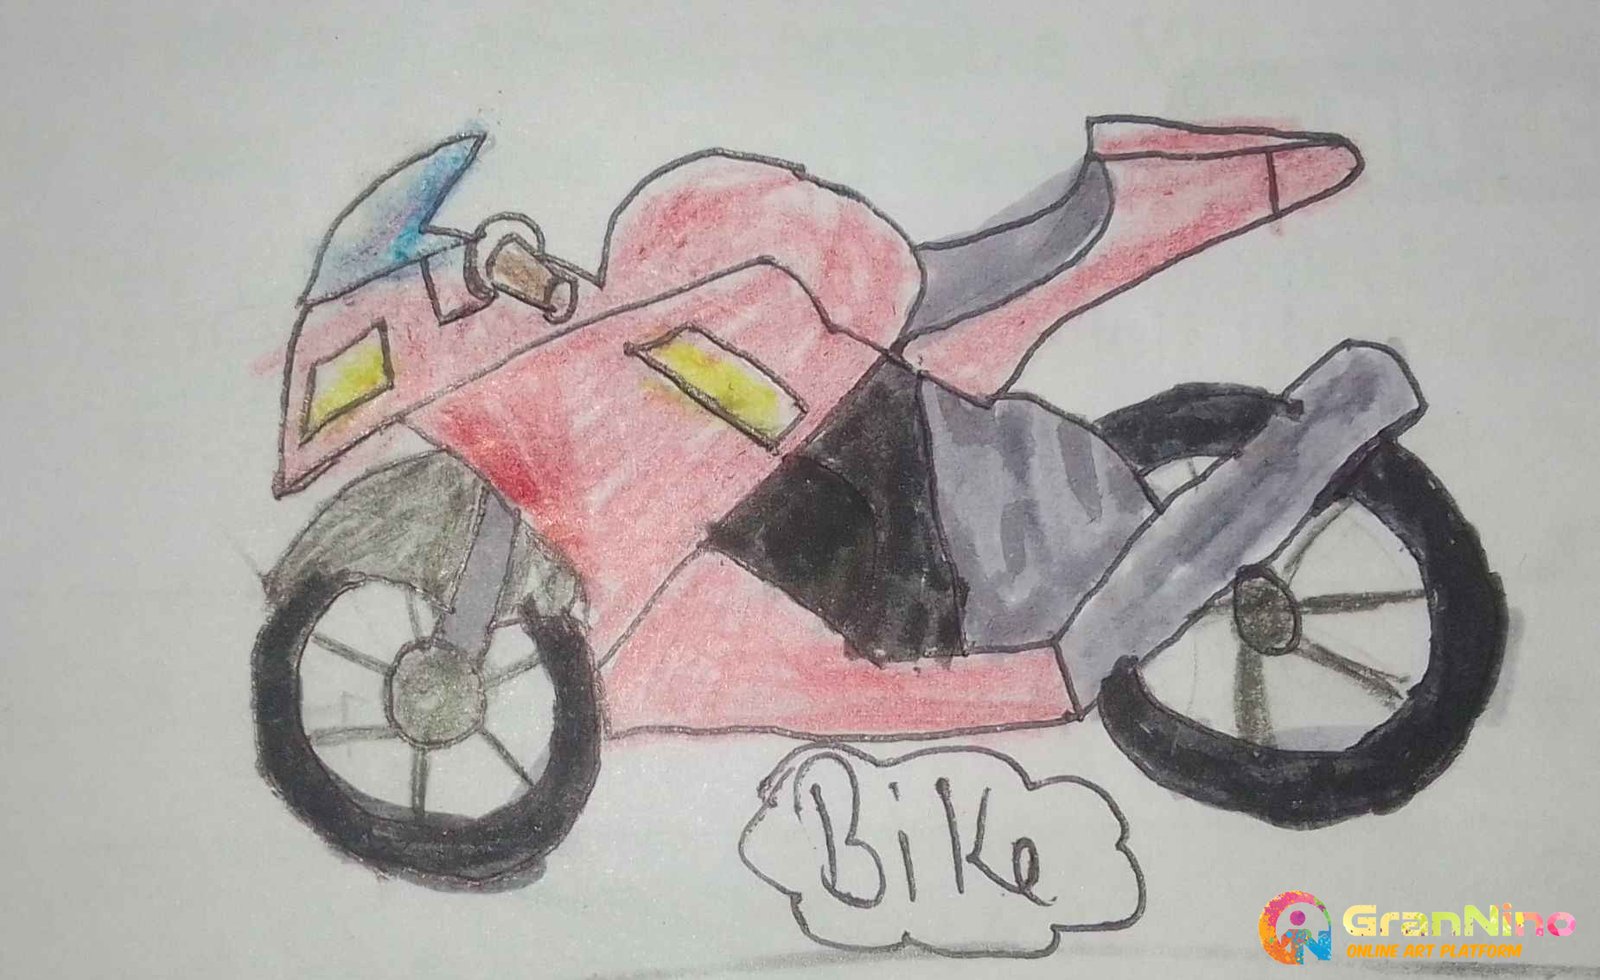 Ktm rc | Bike drawing, Bike sketch, Sketch book